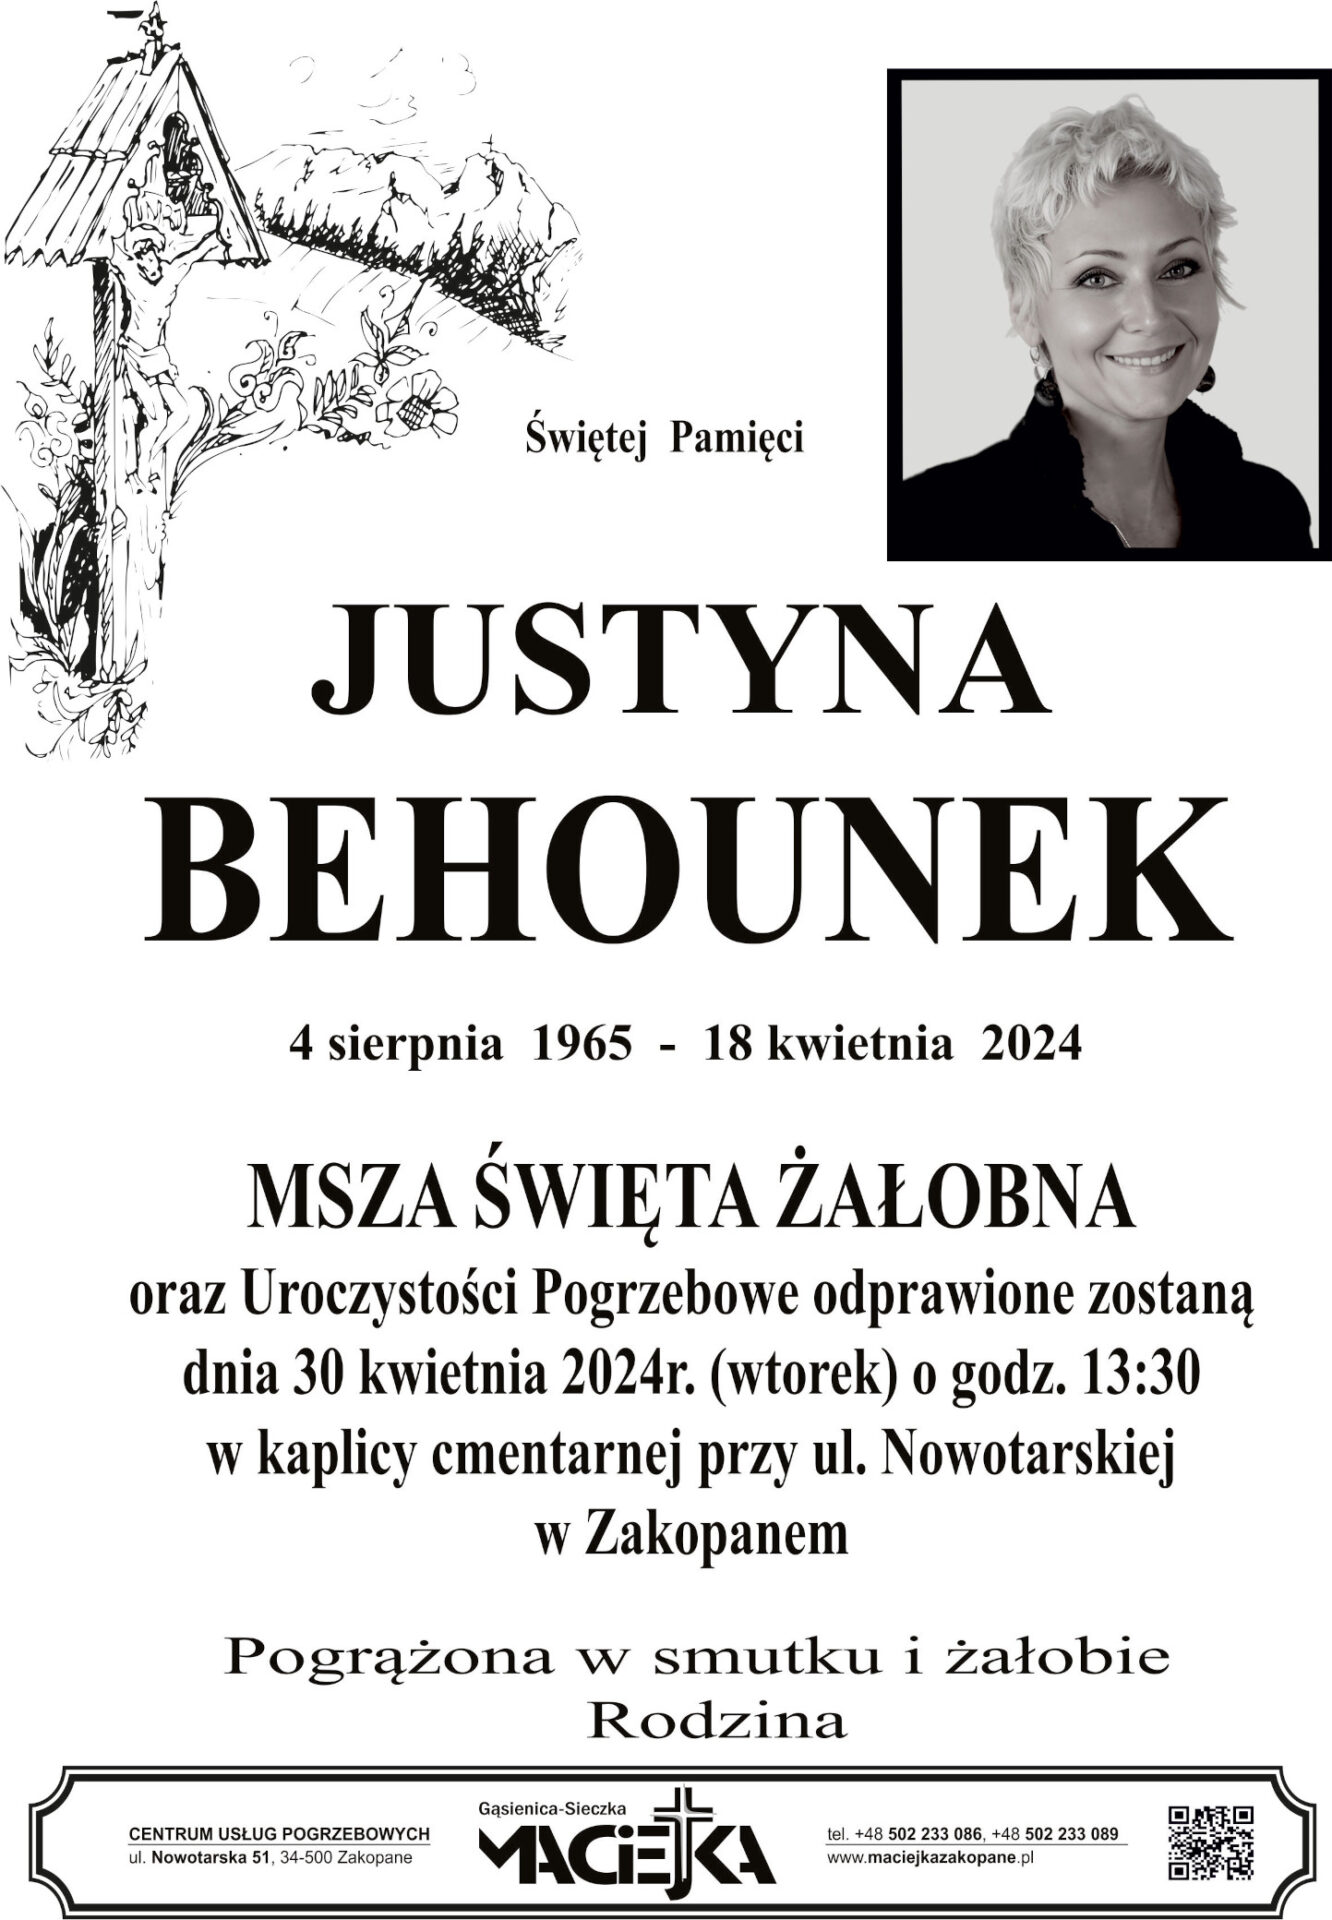 Justyna Behounek